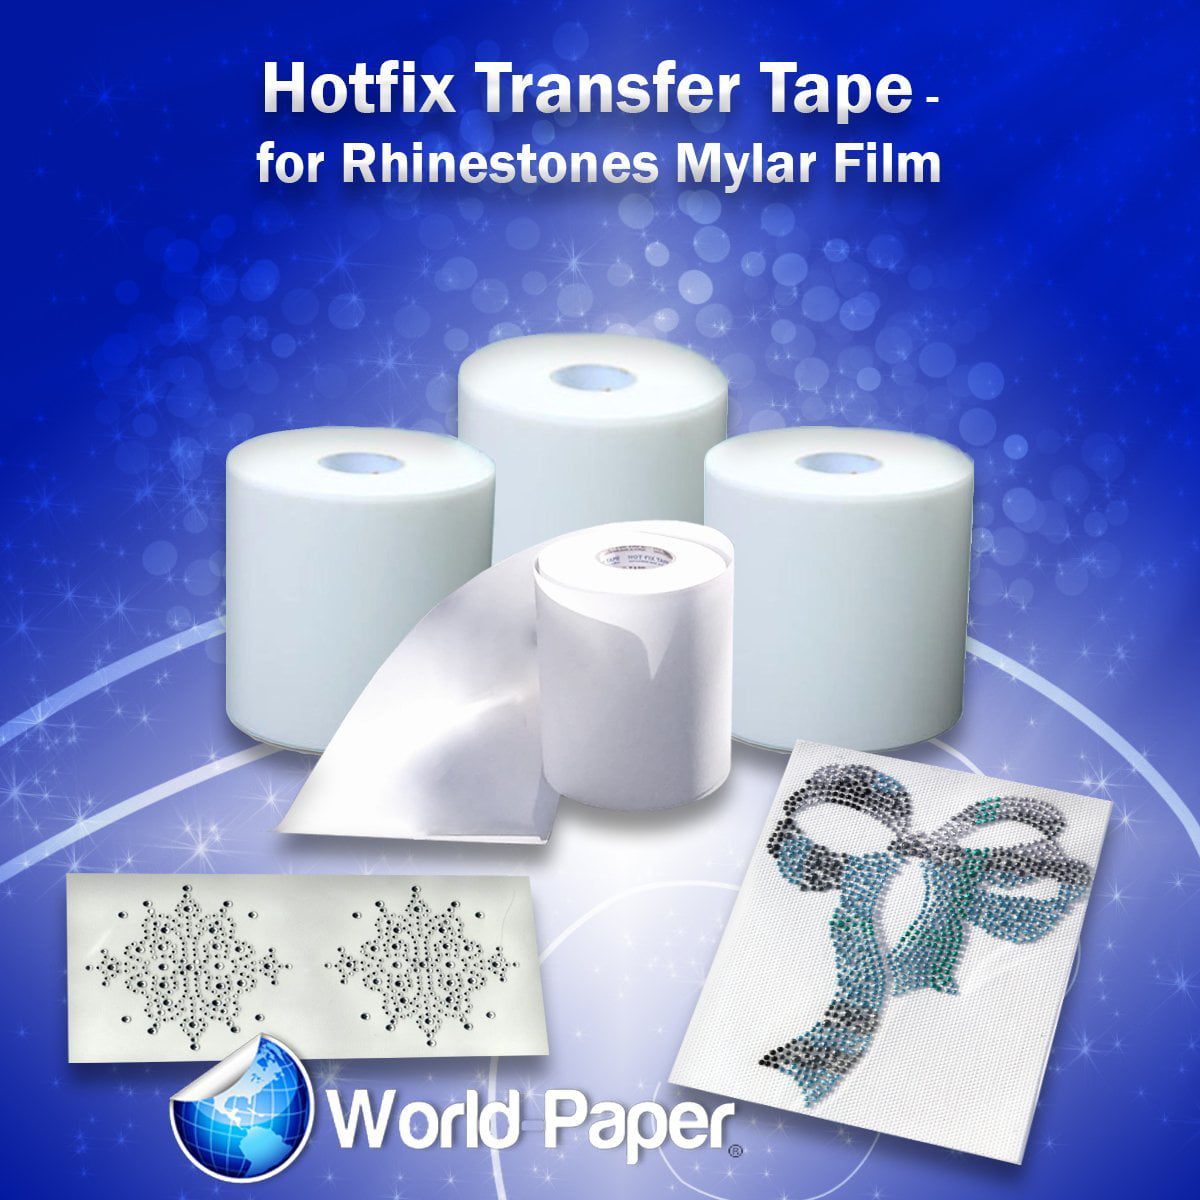 10 Sheets Silicon Hotfix Rhinestone Rhinestud Transfer Film Tape 9.5 x 12"  